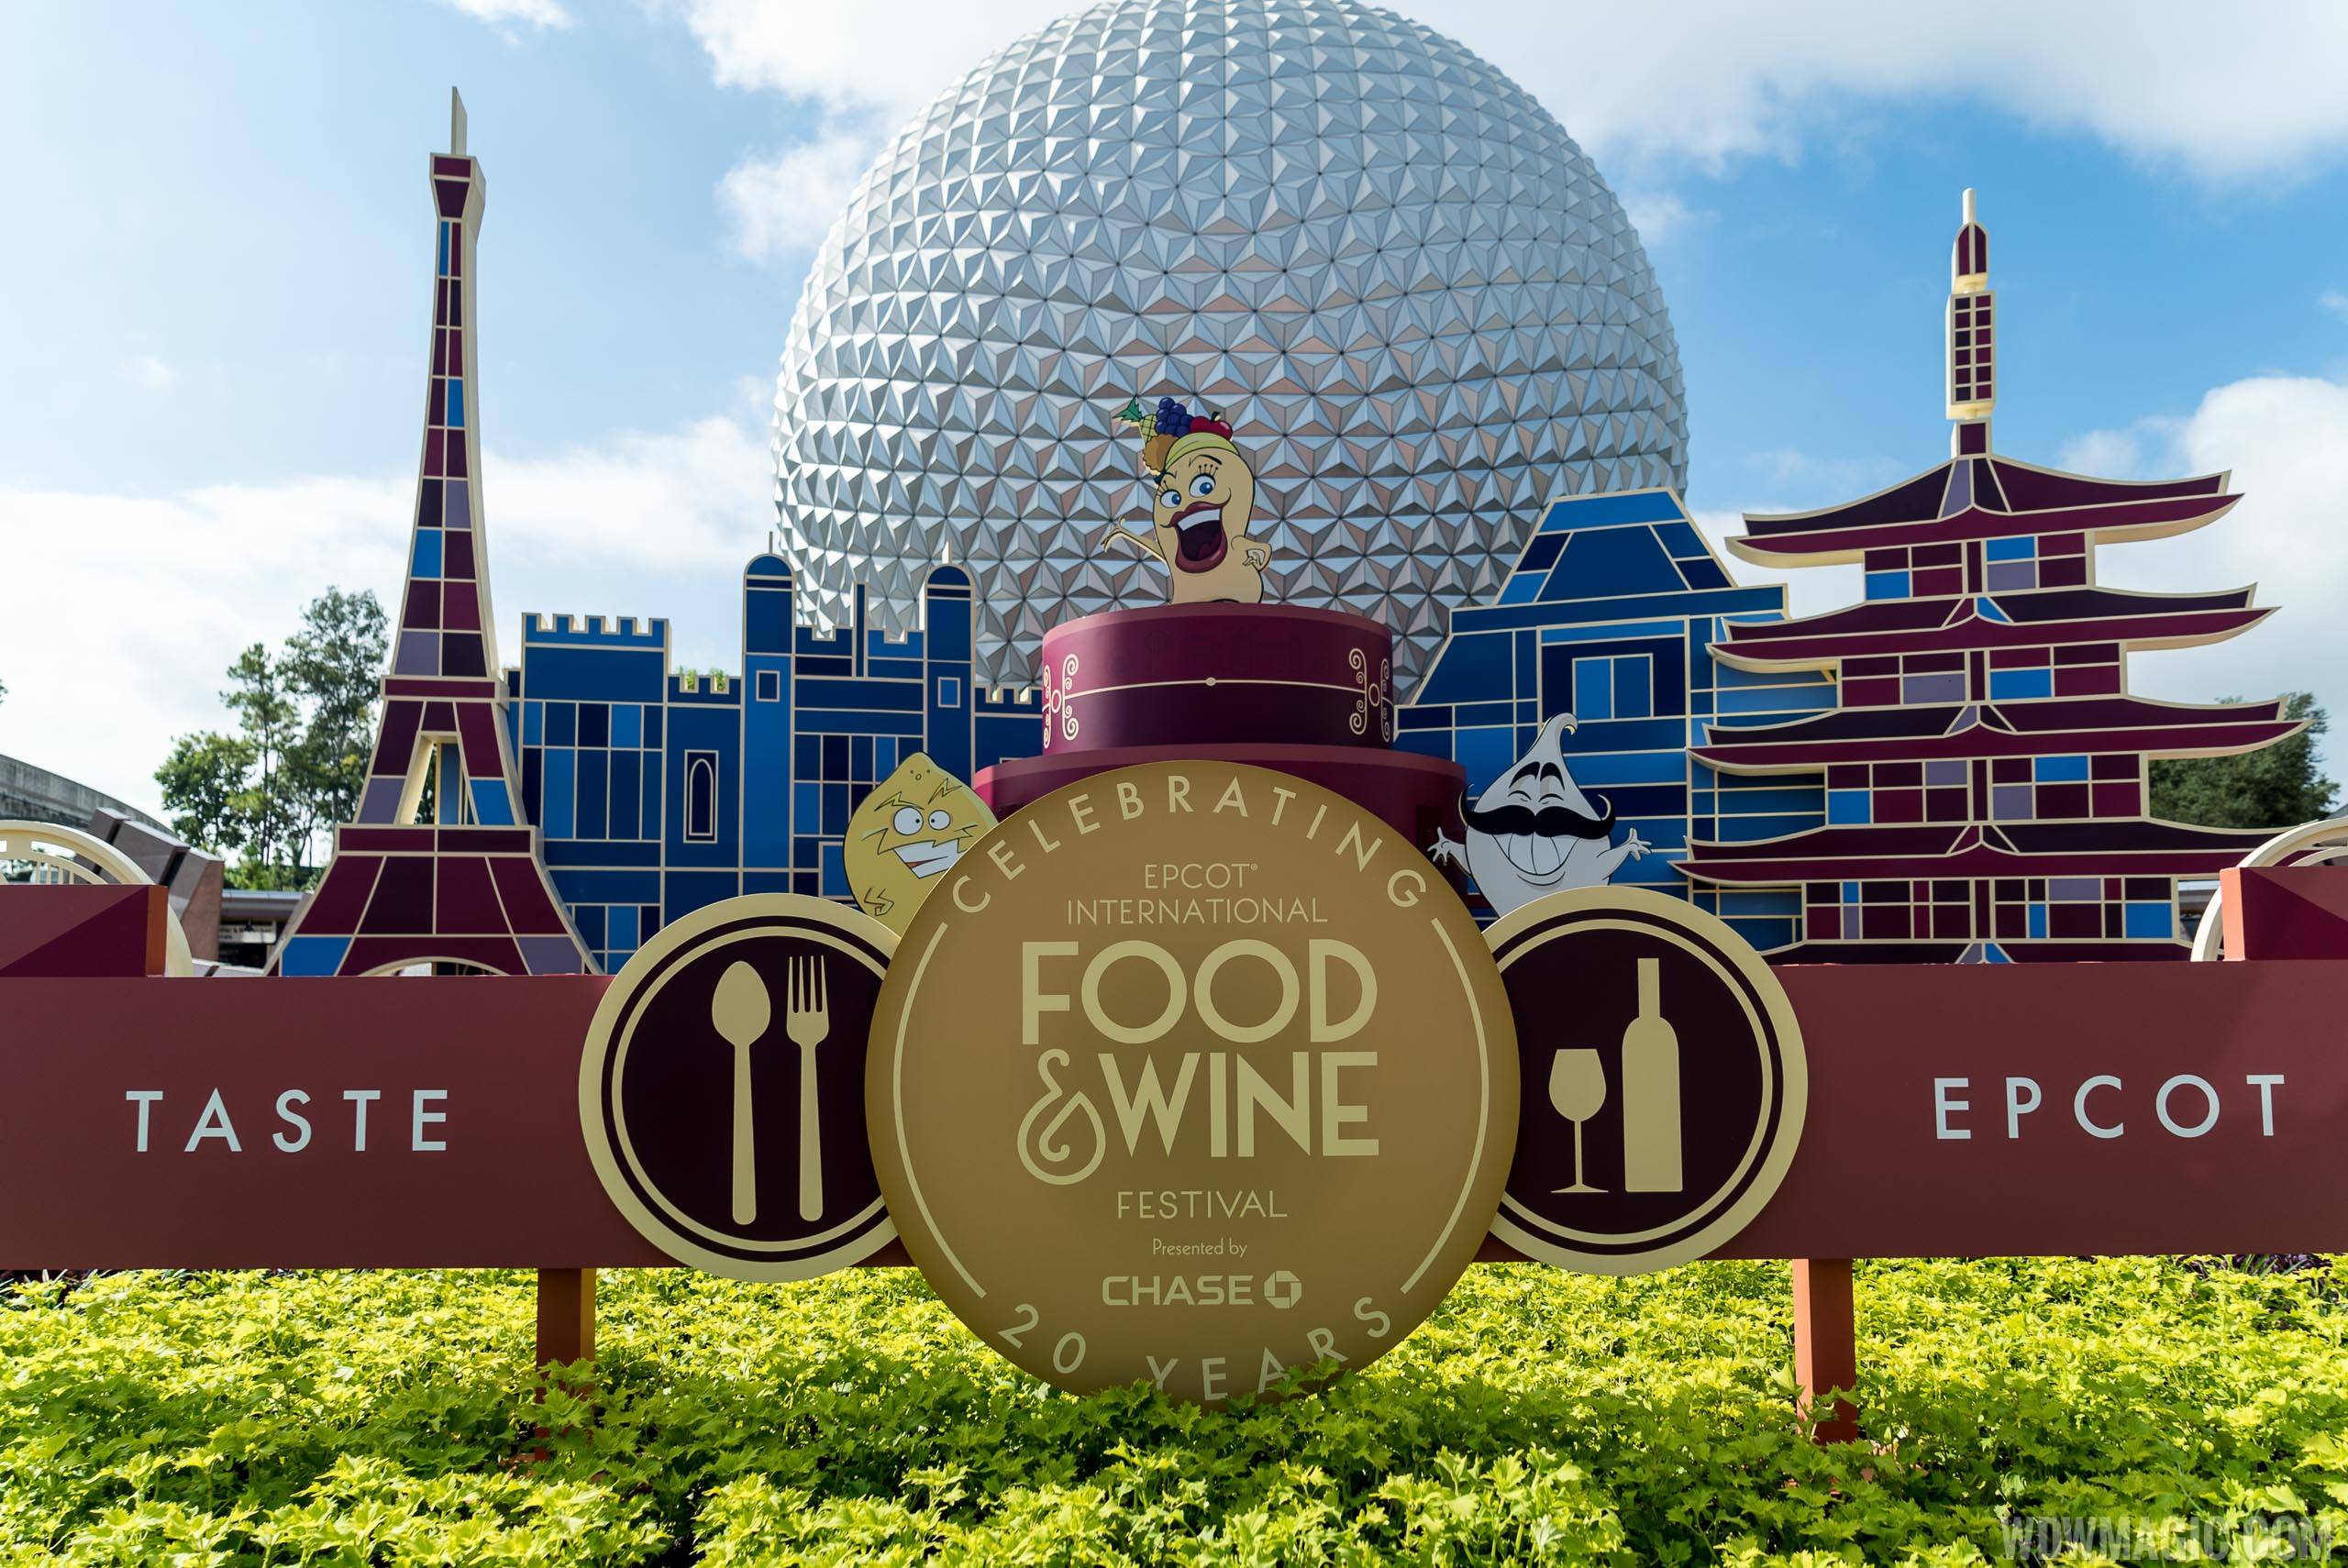 2015 Epcot Food and Wine Festival - Main entrance decor